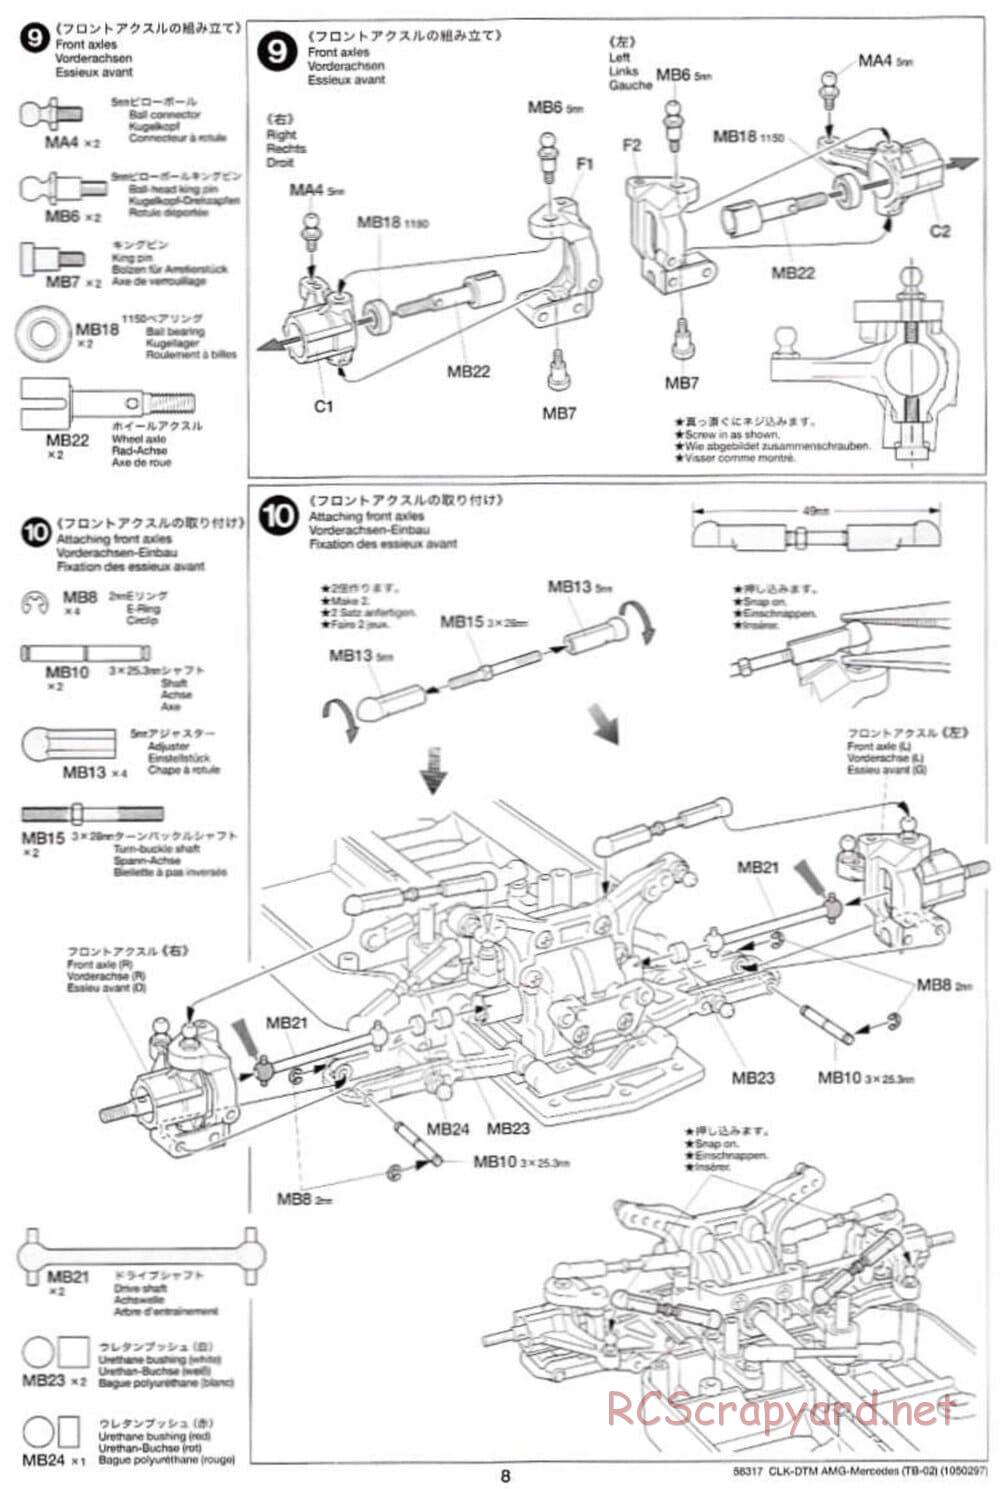 Tamiya - CLK DTM 2002 AMG Mercedes - TB-02 Chassis - Manual - Page 8